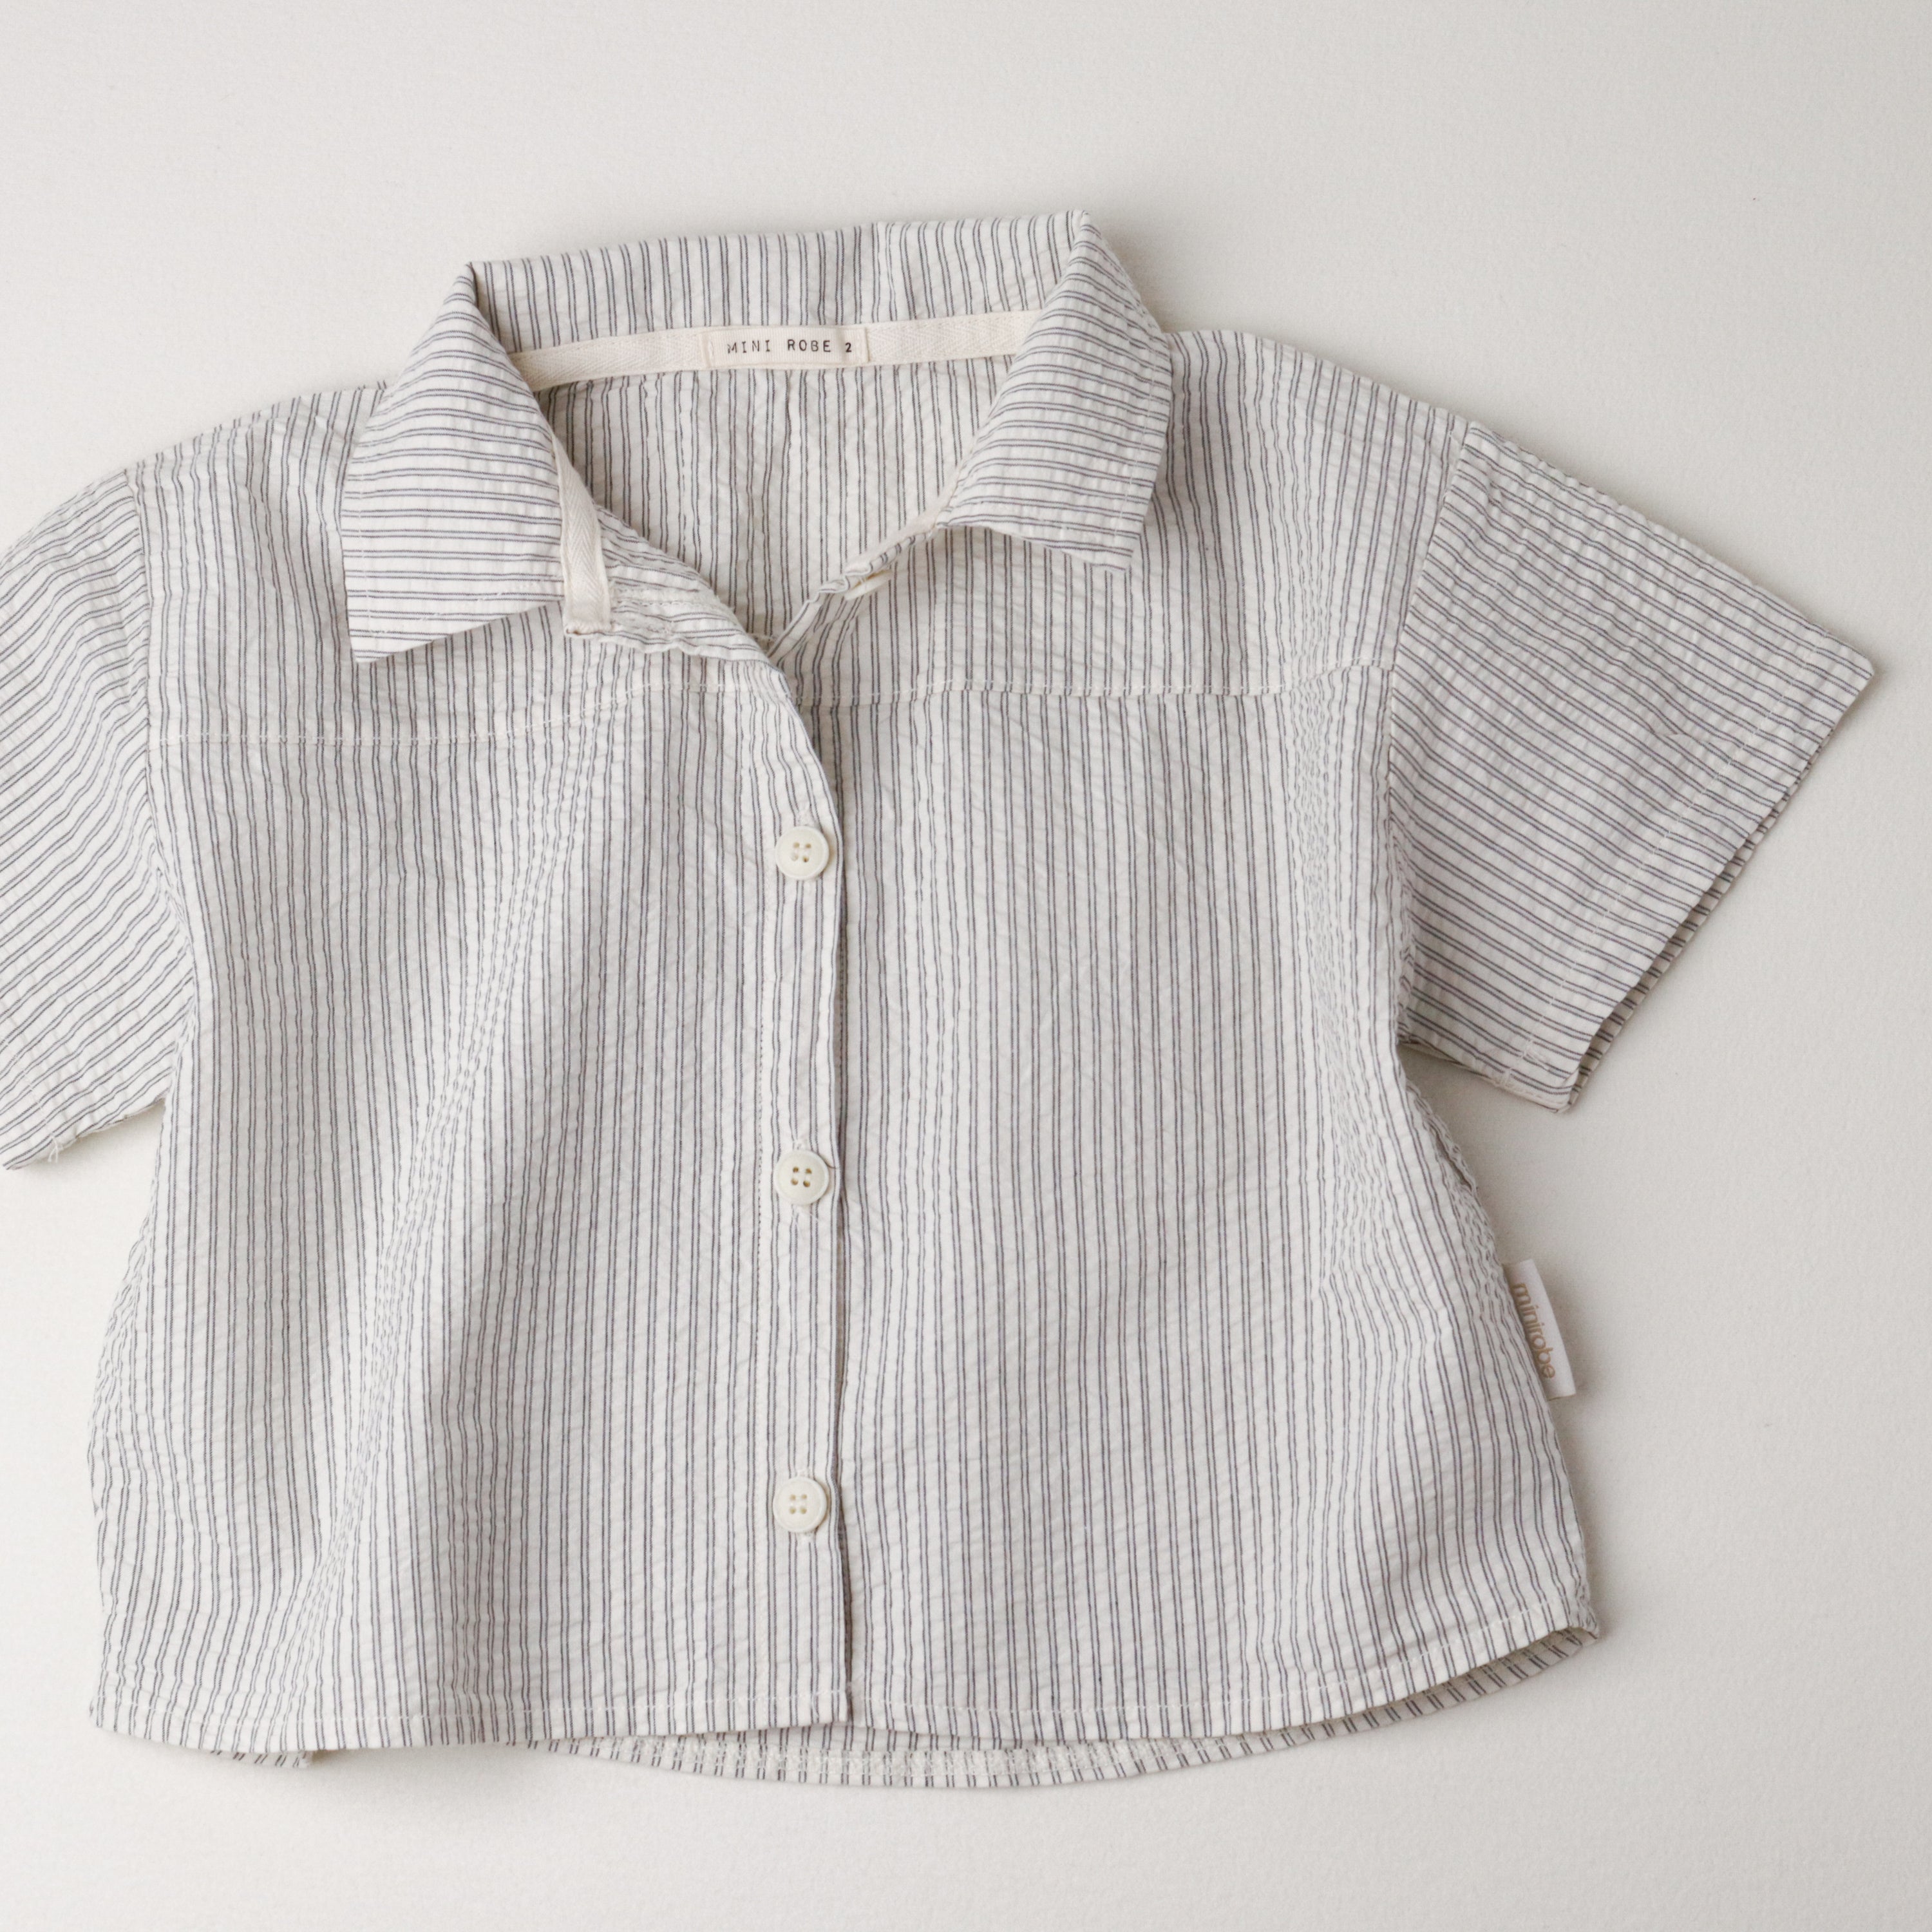 Minirobe Picnic Shirts (Baby & Toddler) - Ready Stock